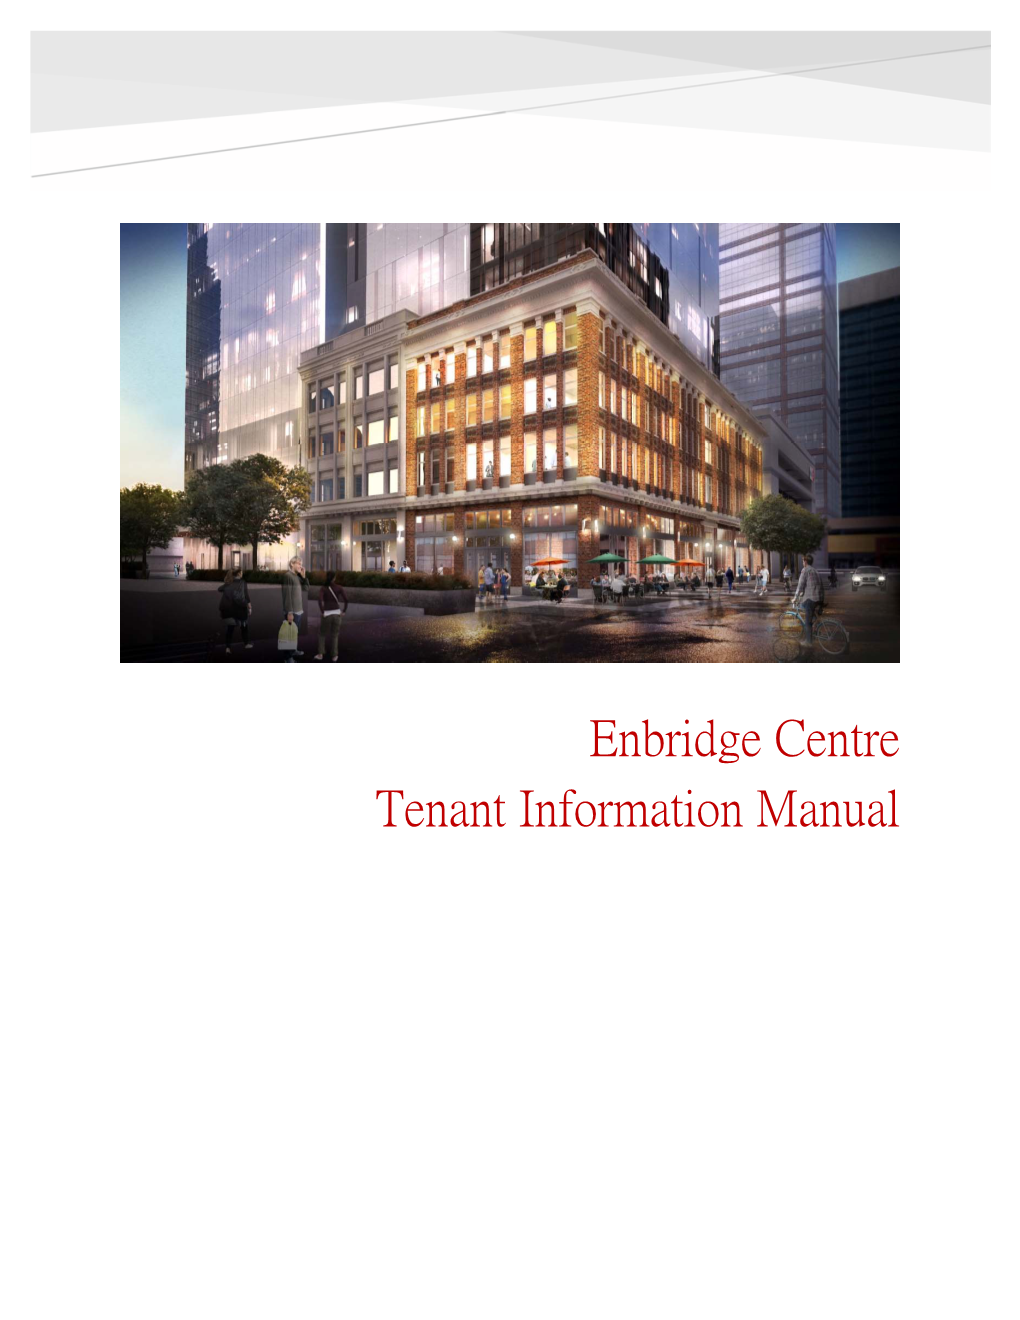 Enbridge Centre Tenant Information Manual